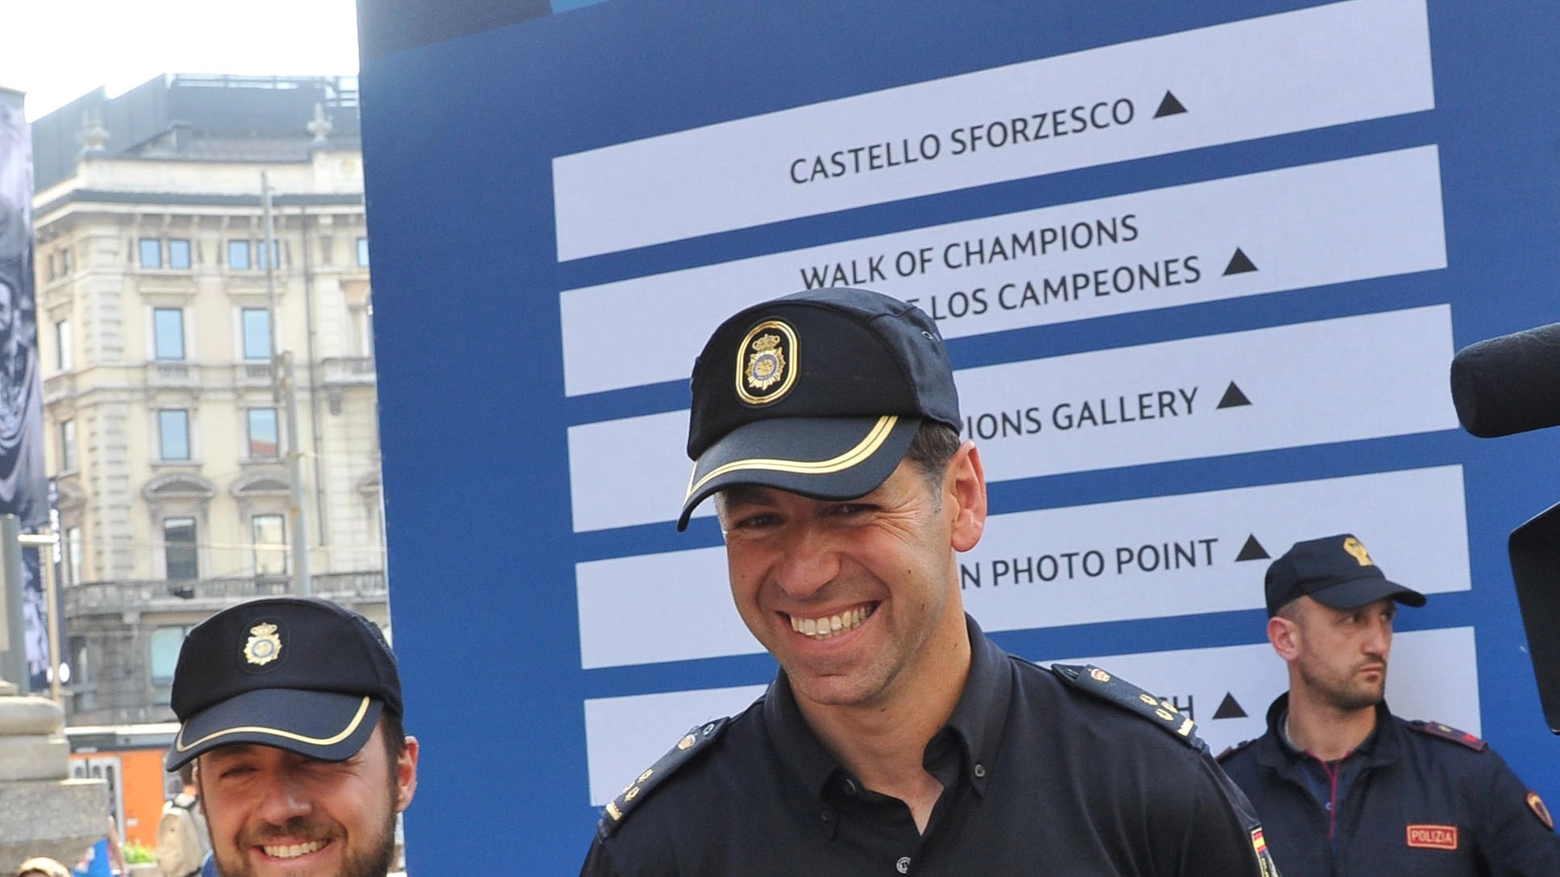 Champions, polizia spagnola a Milano (Newpress)